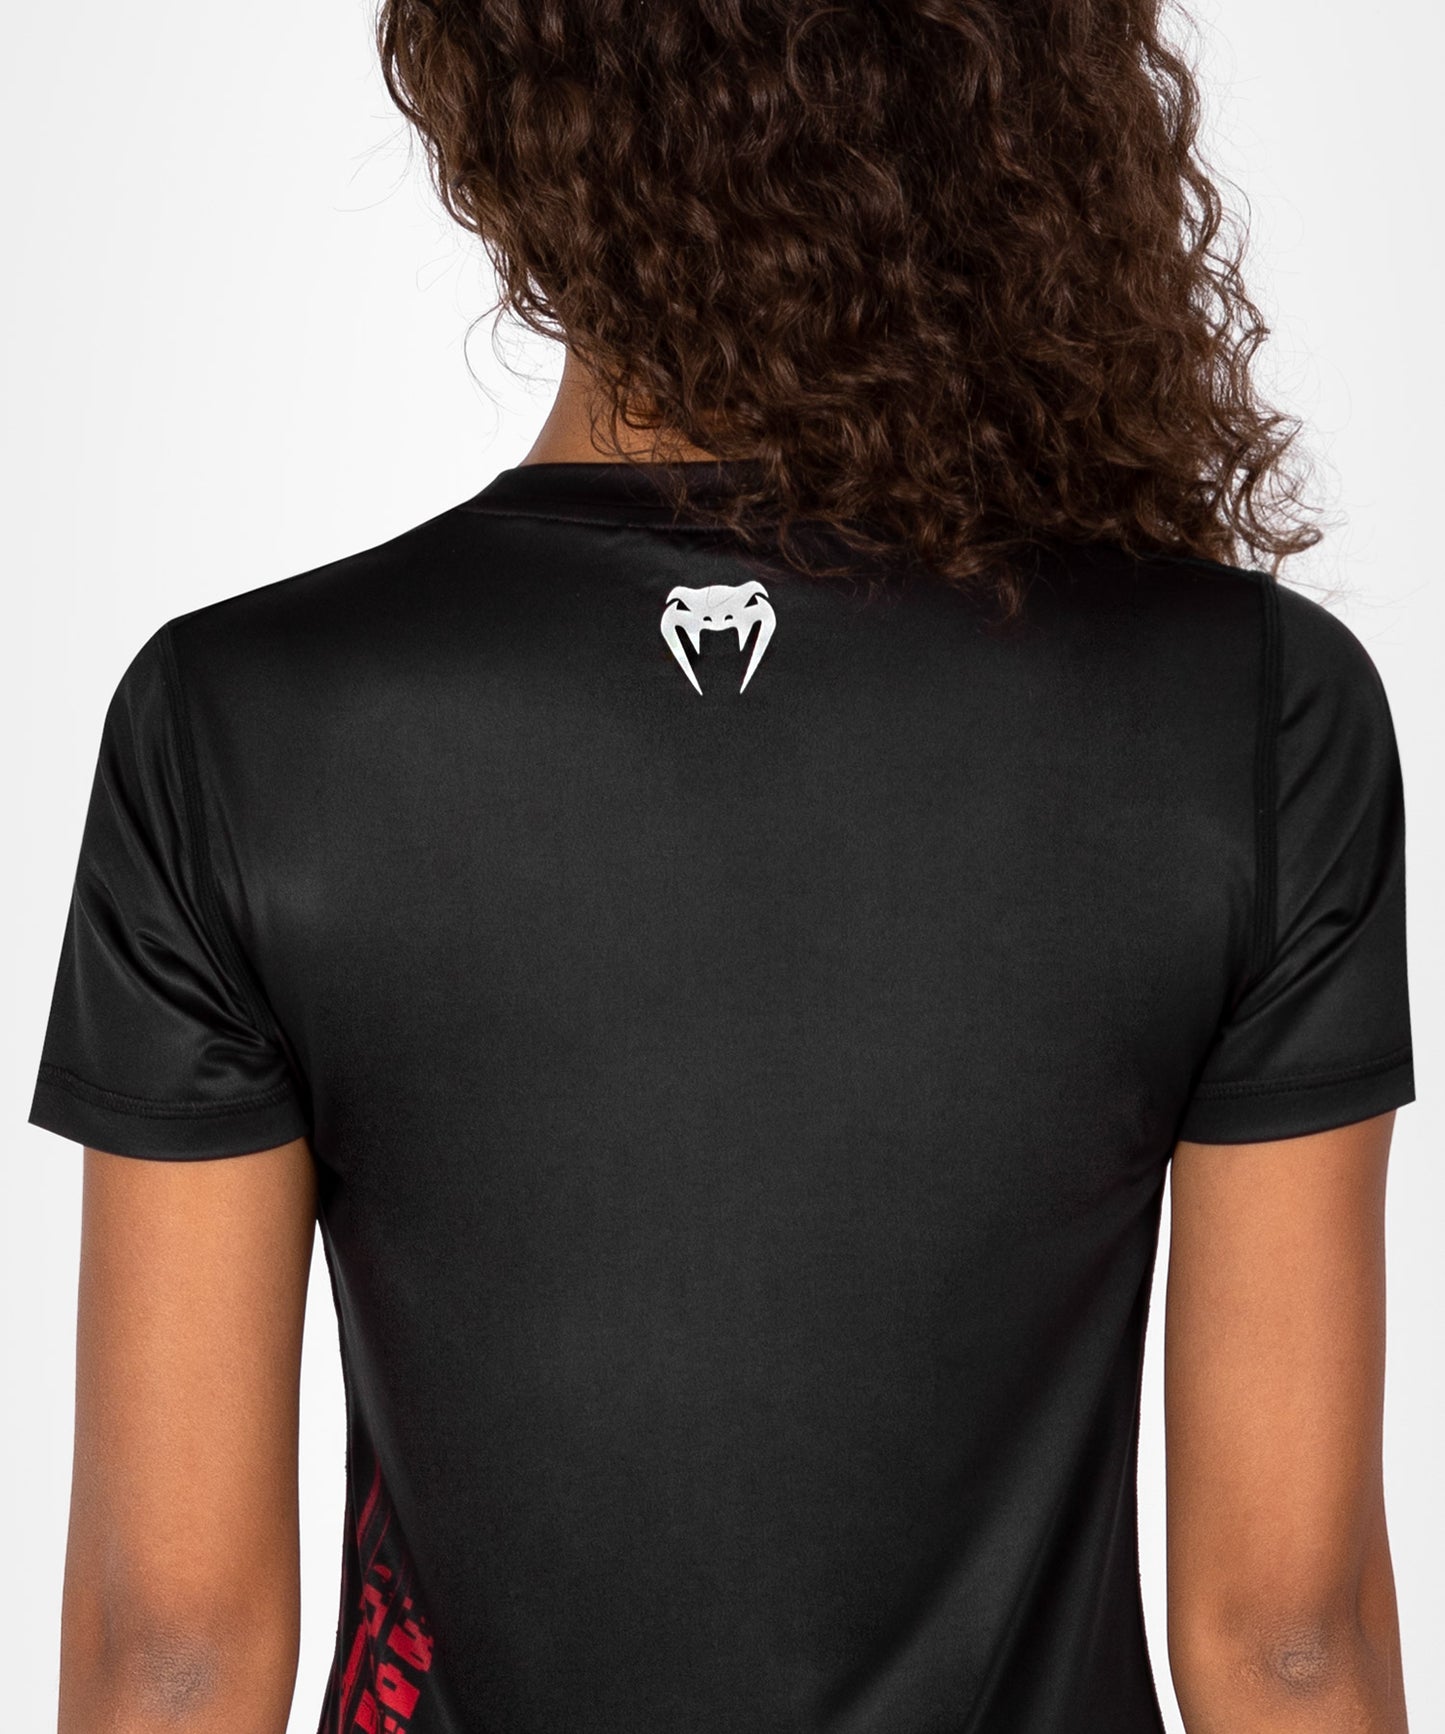 UFC Venum Performance Institute 2.0 Dry-Tech T-shirt voor Dames - Zwart/Rood